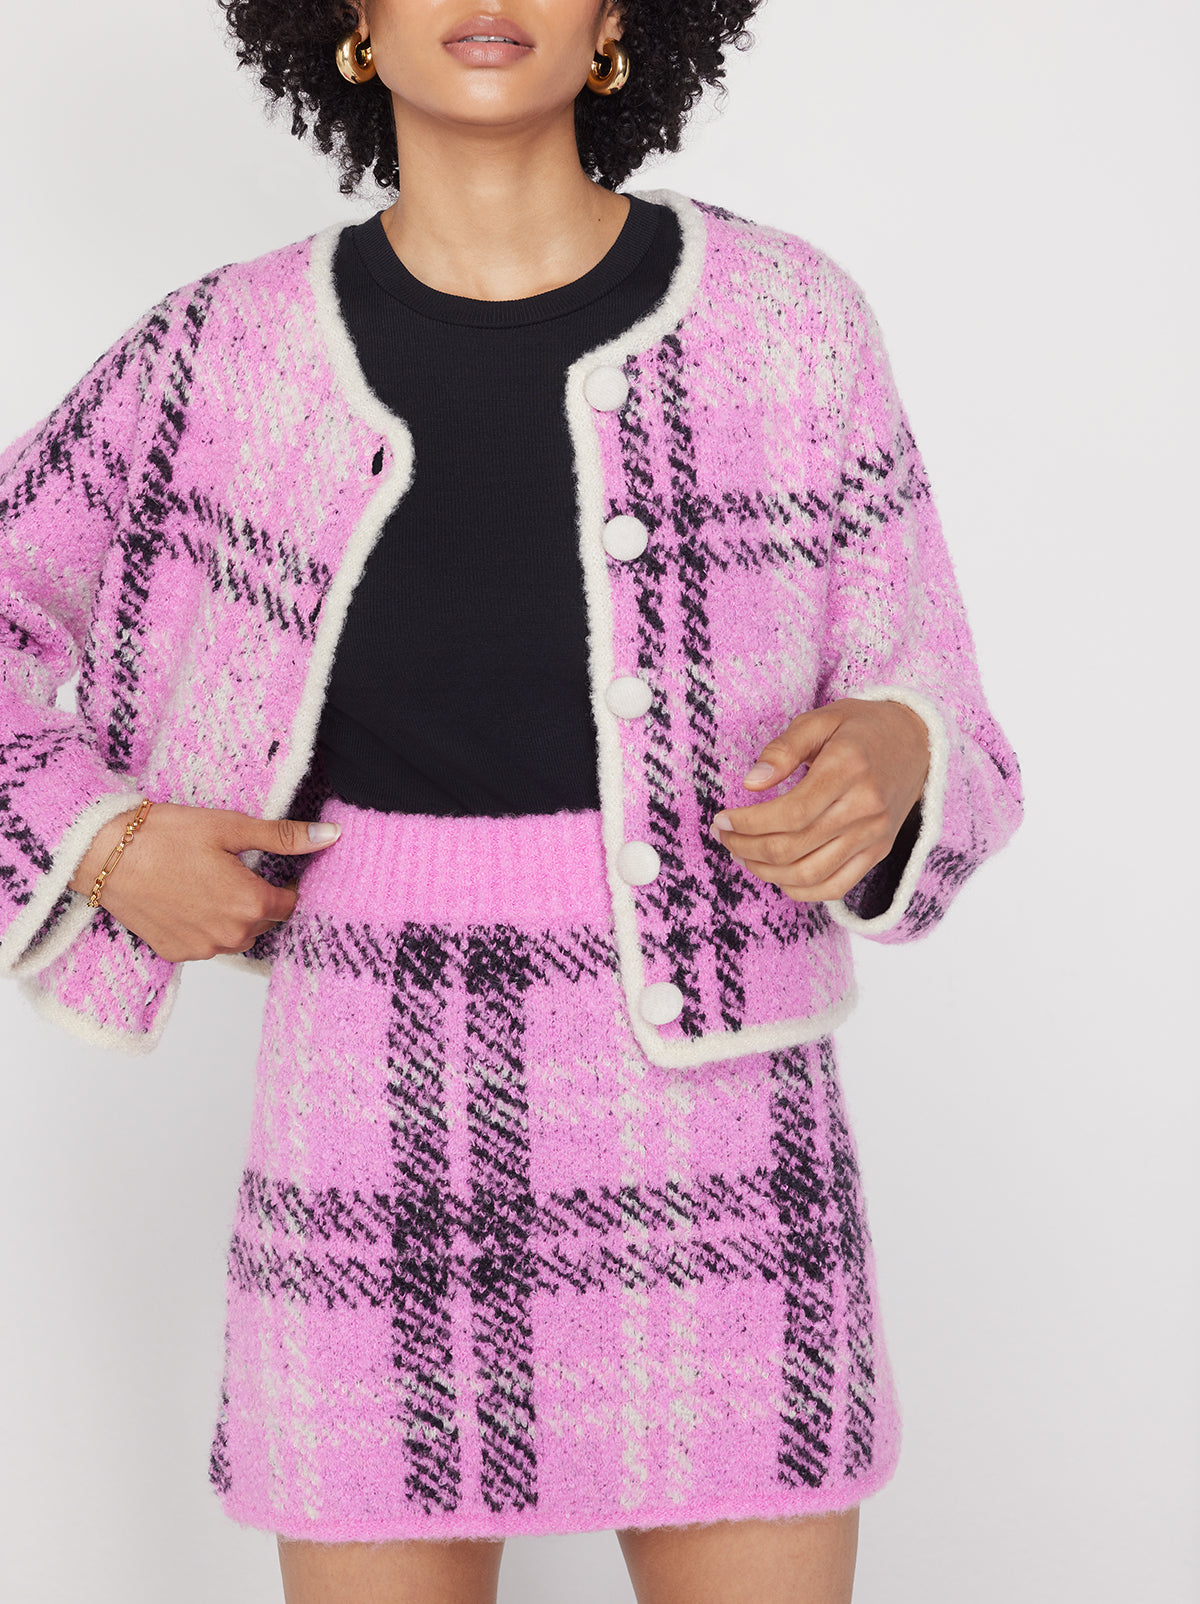 Winnie Pink Check Boucle Knit Cardigan By KITRI Studio